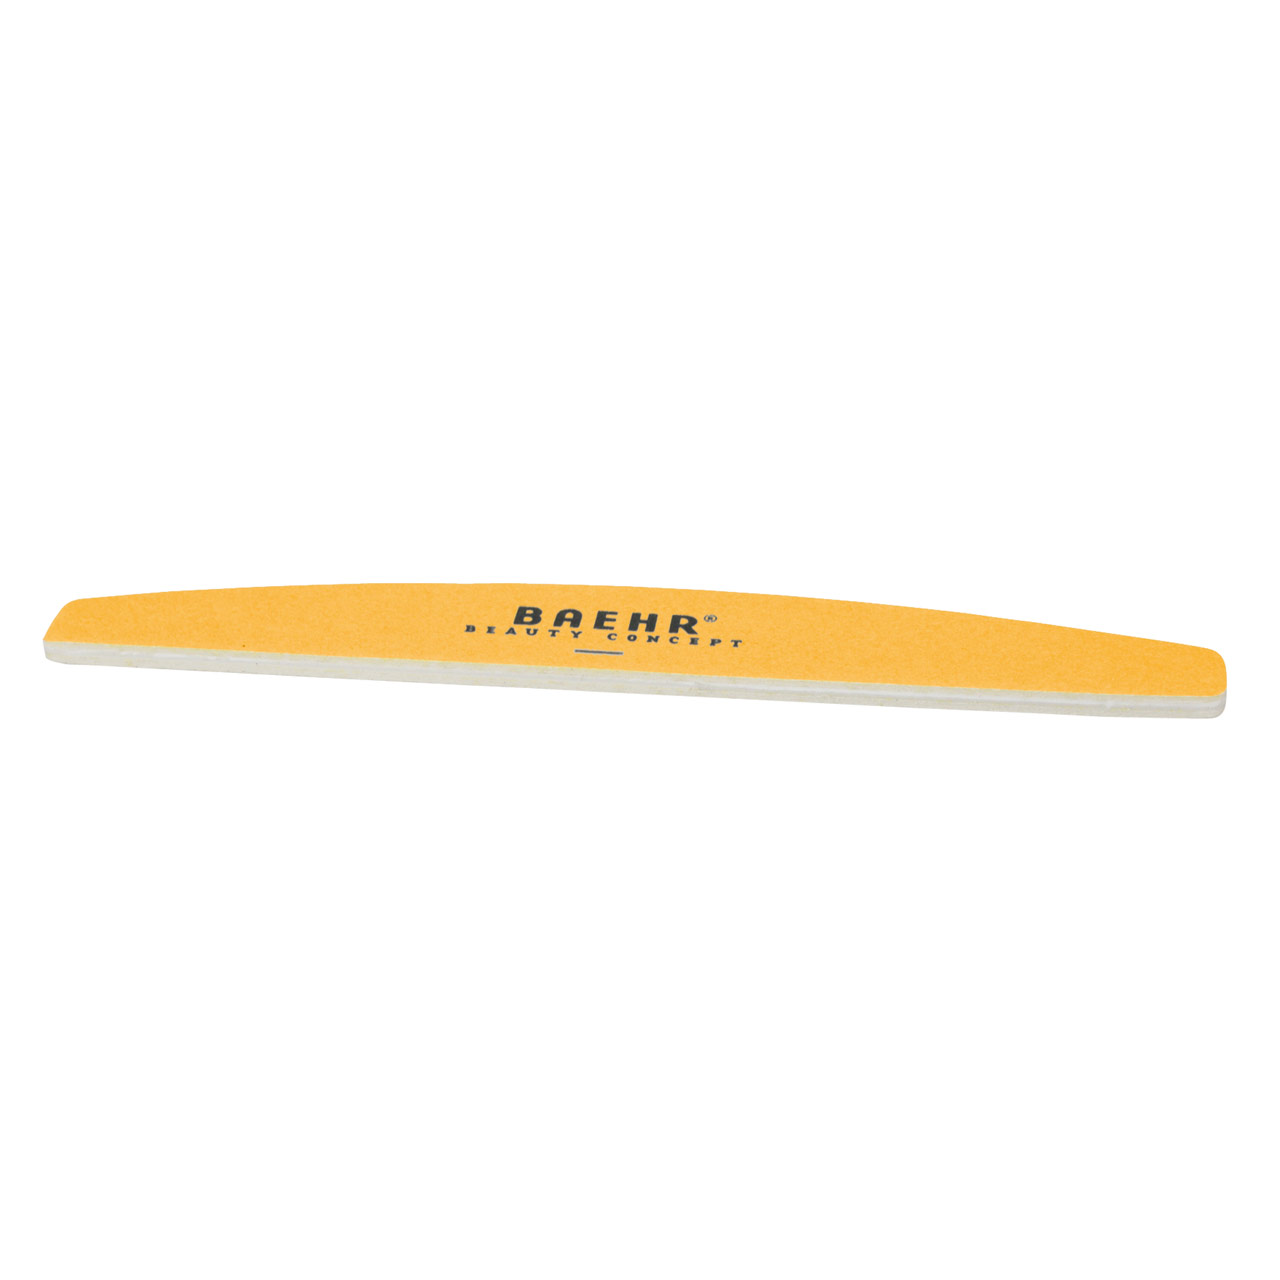 BAEHR BEAUTY CONCEPT - NAILS Profifeile Bow "WEISS/APRICOT" mit Logo Körnung 100/240, 17,8cm